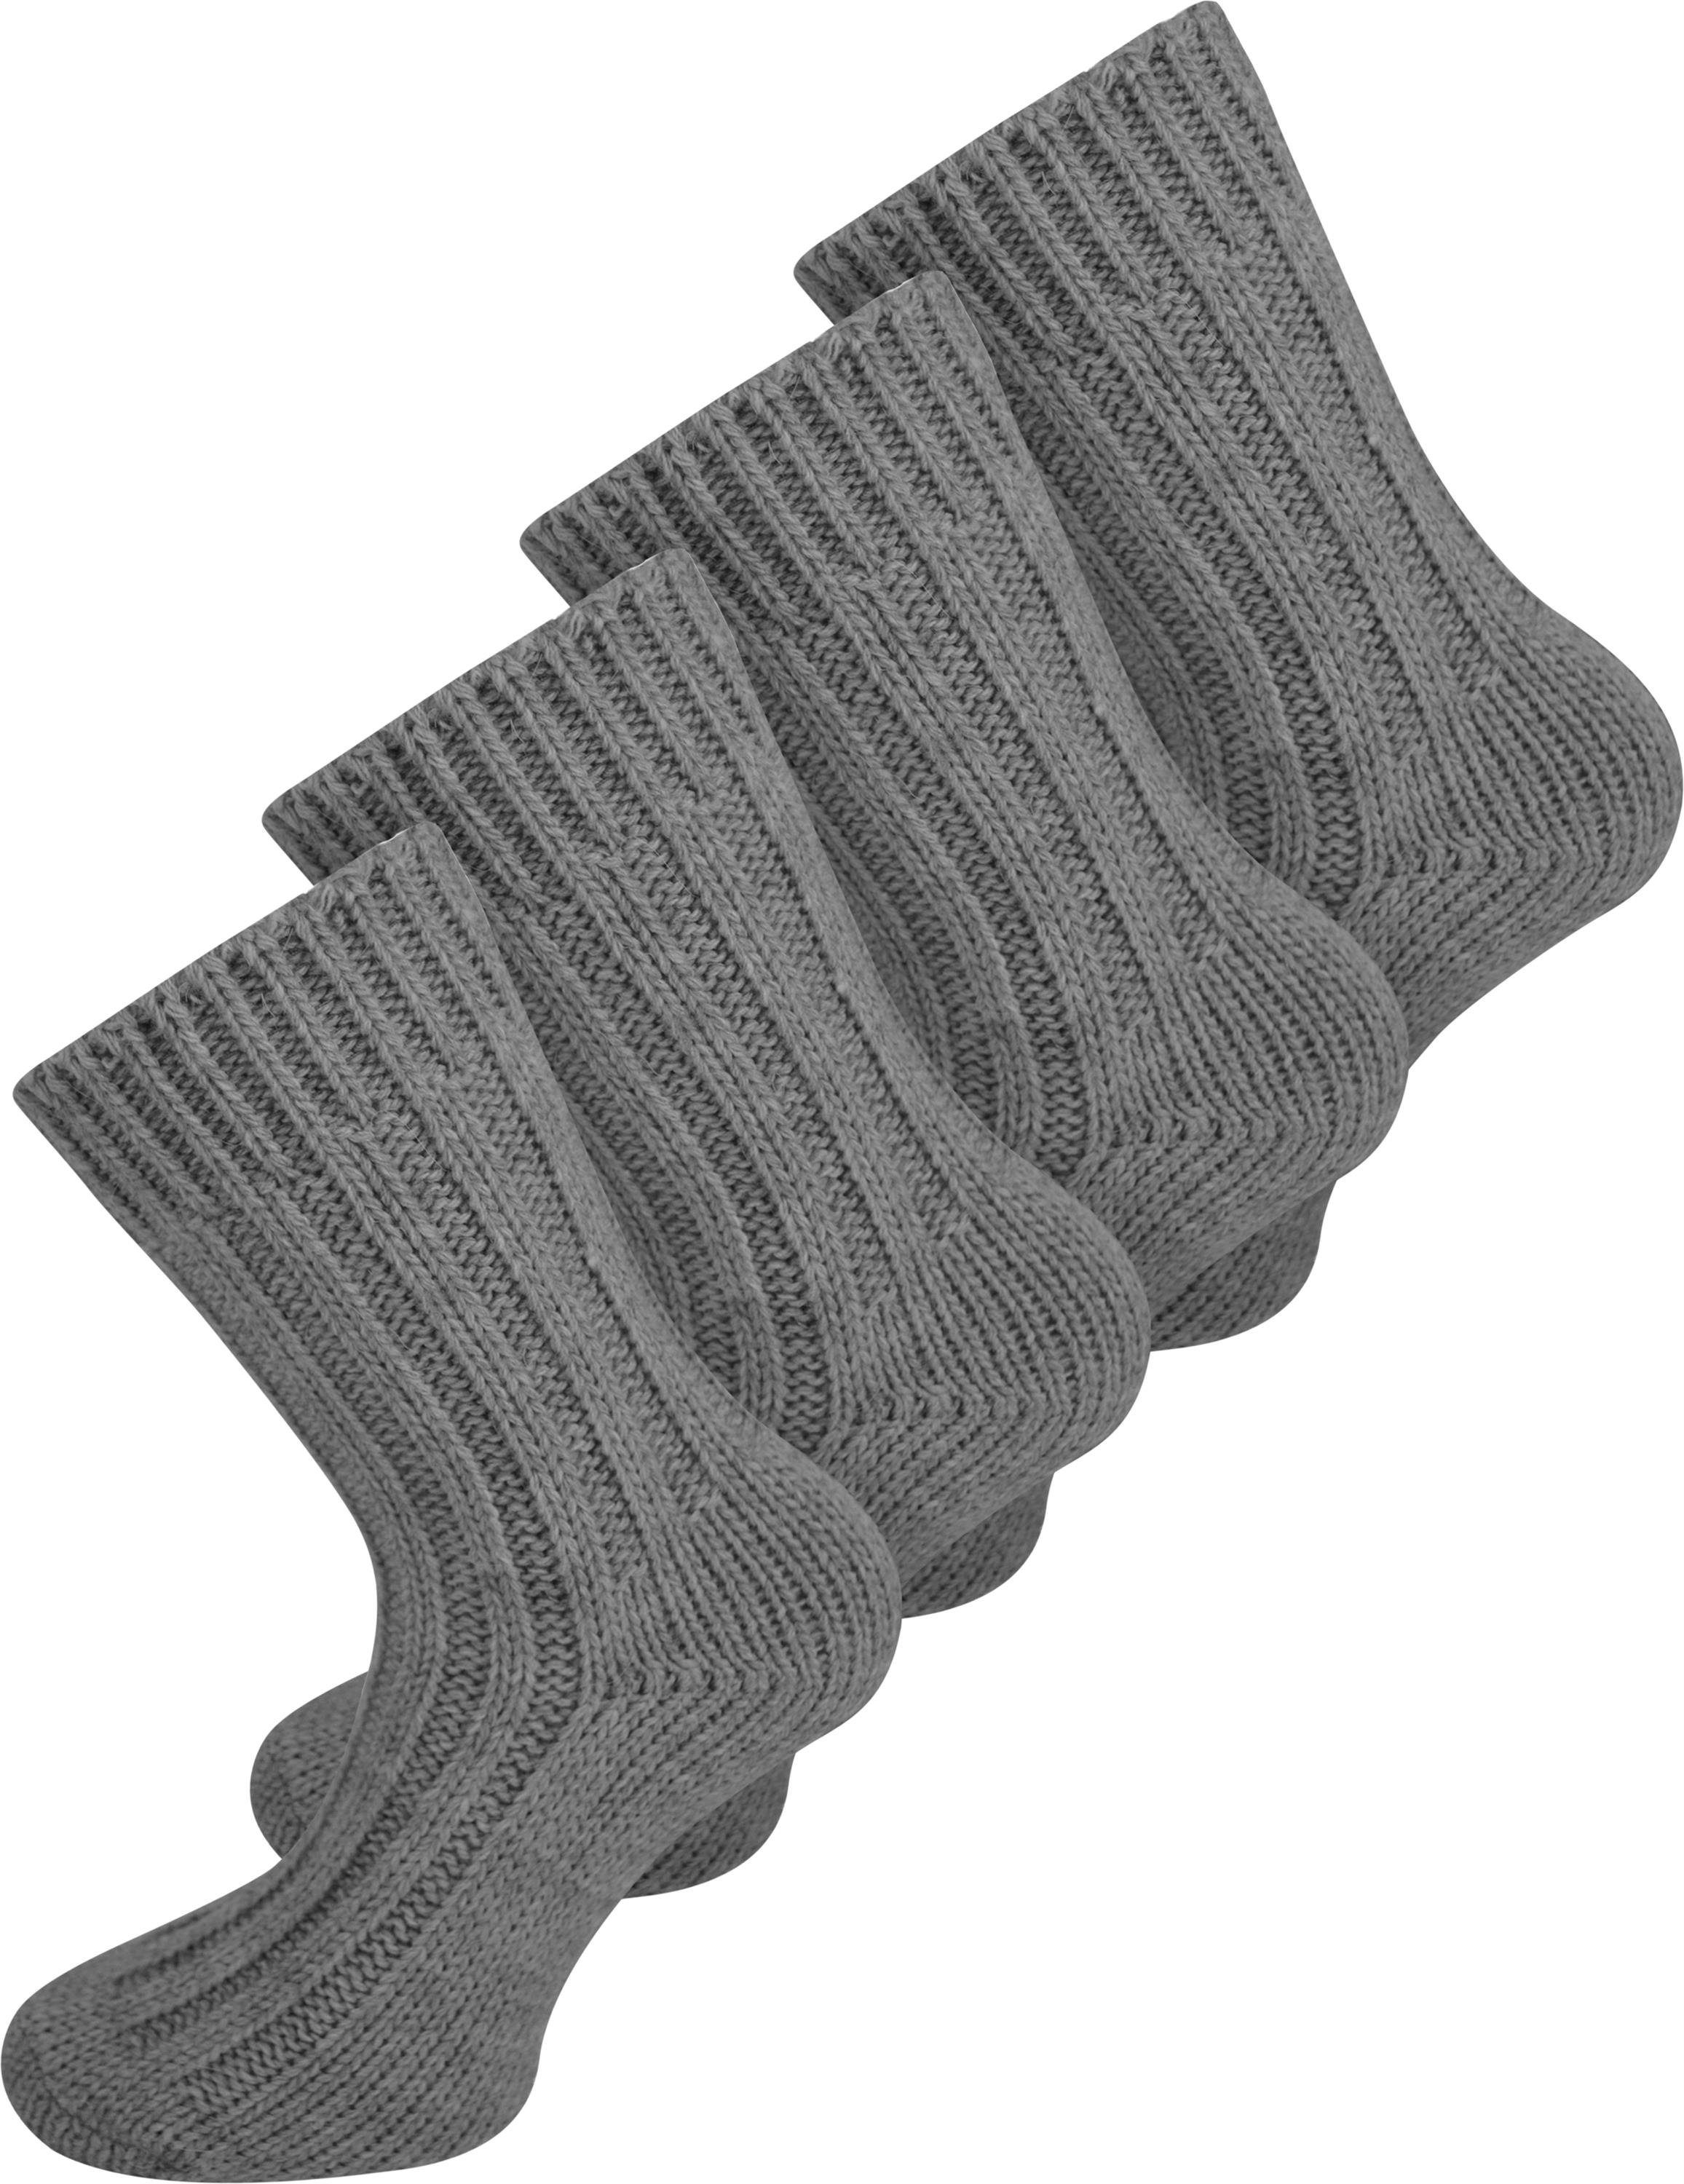 normani Thermosocken 4 Paar Alpaka-Socken (4 Paar) hochwertige Alpaka-Wolle Mittelgrau